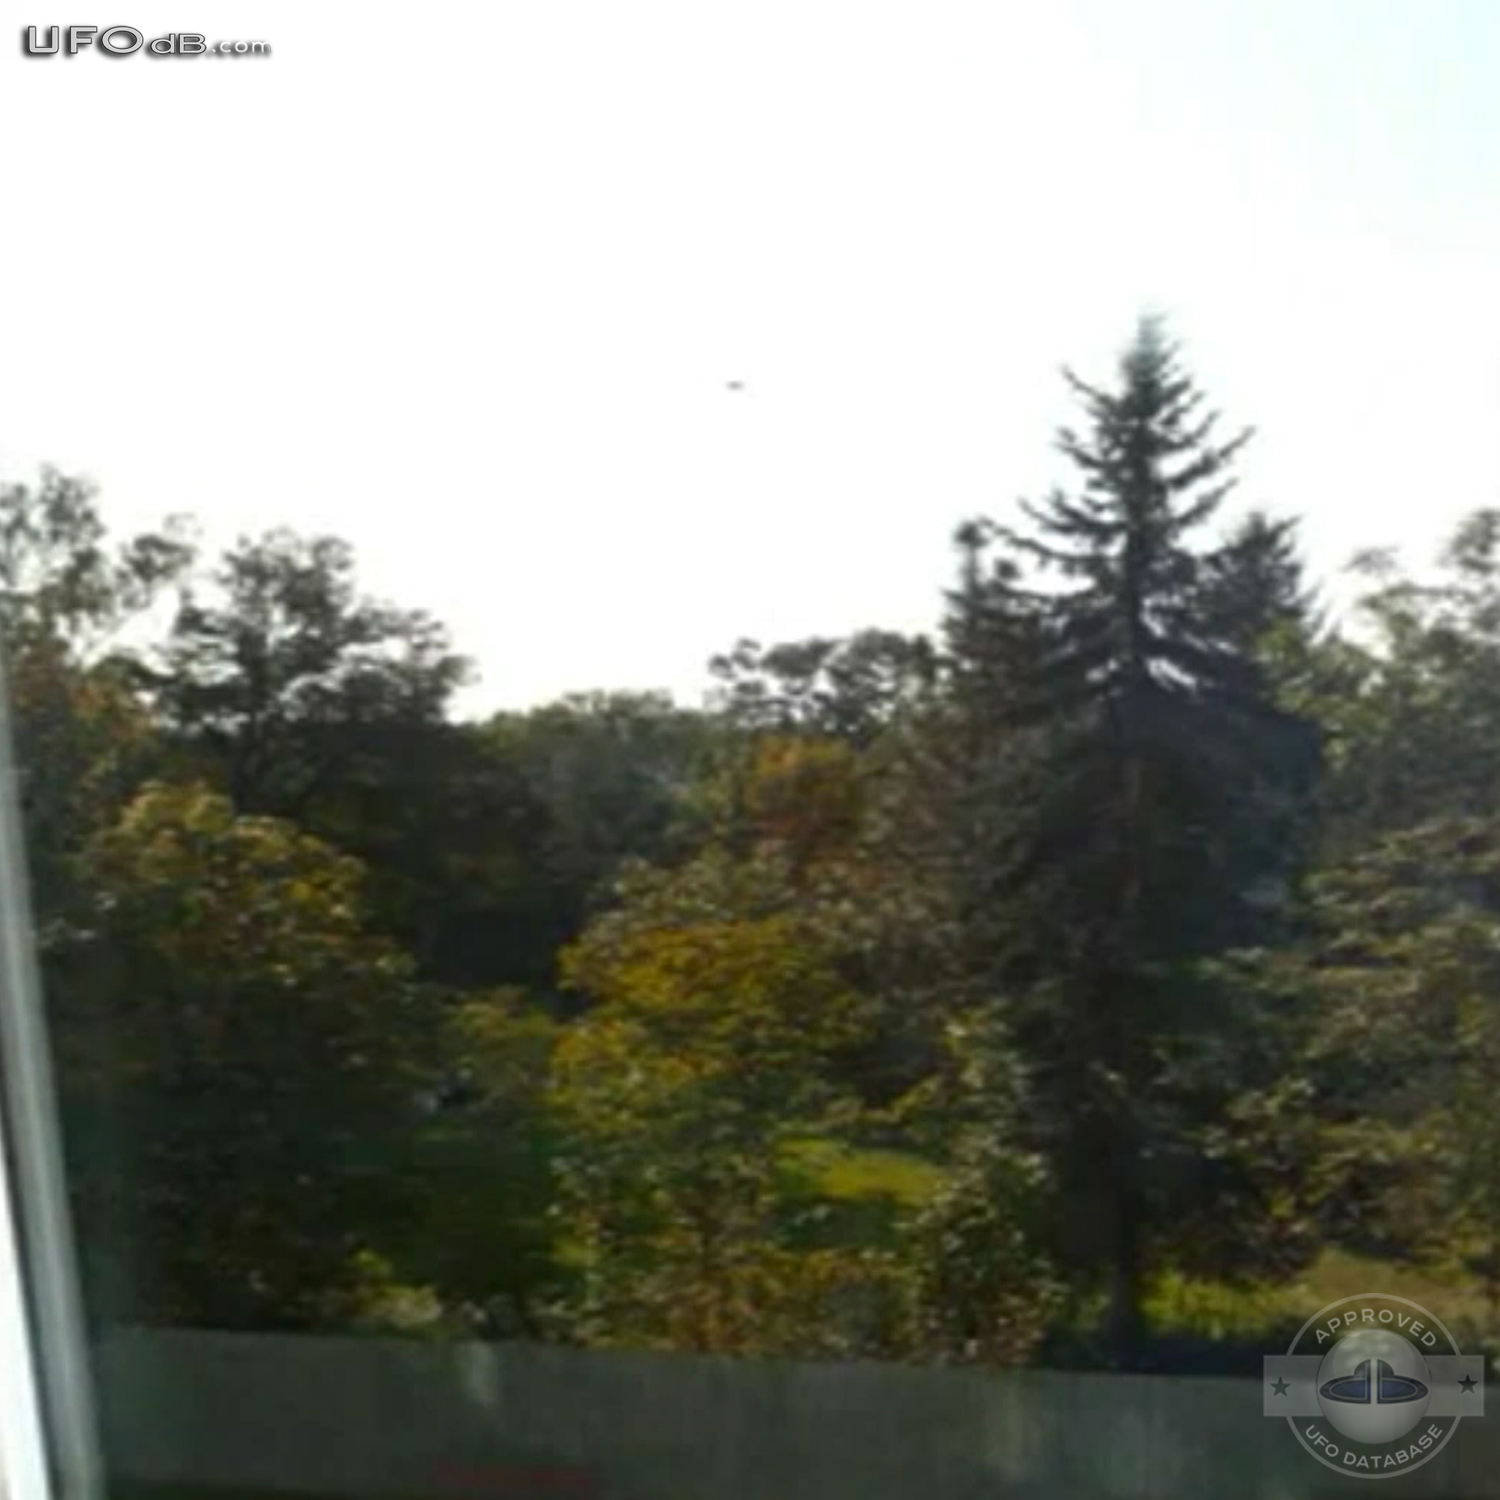 Camera test captures UFO in the sky in Mimon, Liberec, Czech Republic UFO Picture #371-1